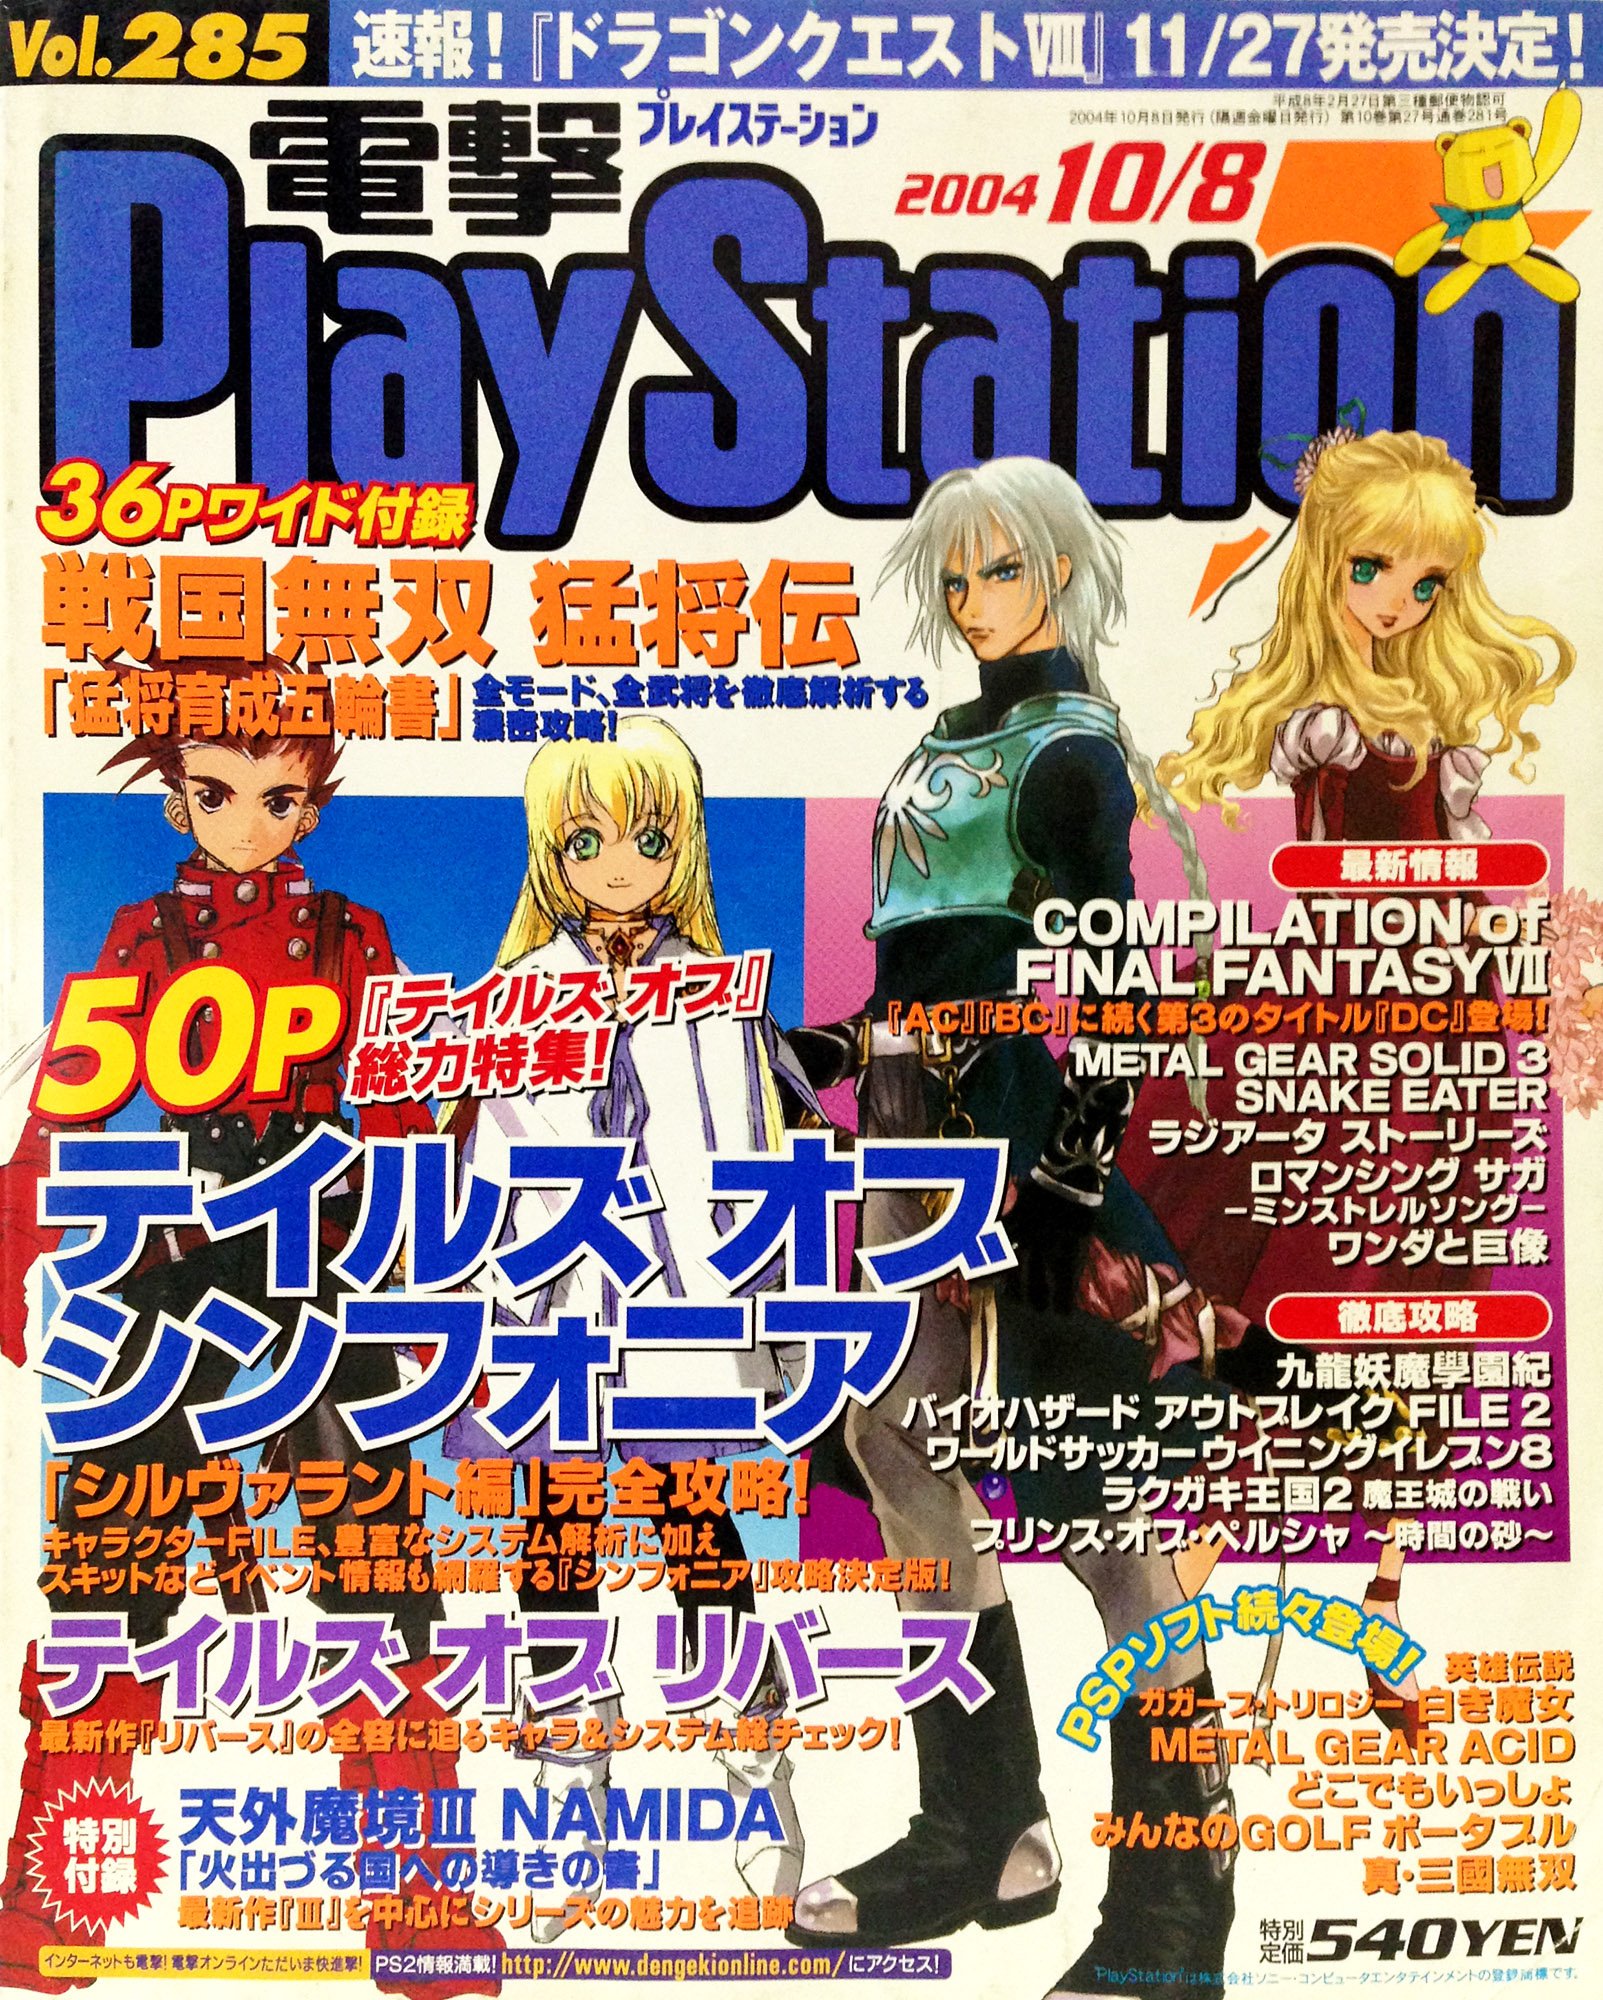 Dengeki Playstation Video Game Magazines Page 12 Retromags Community